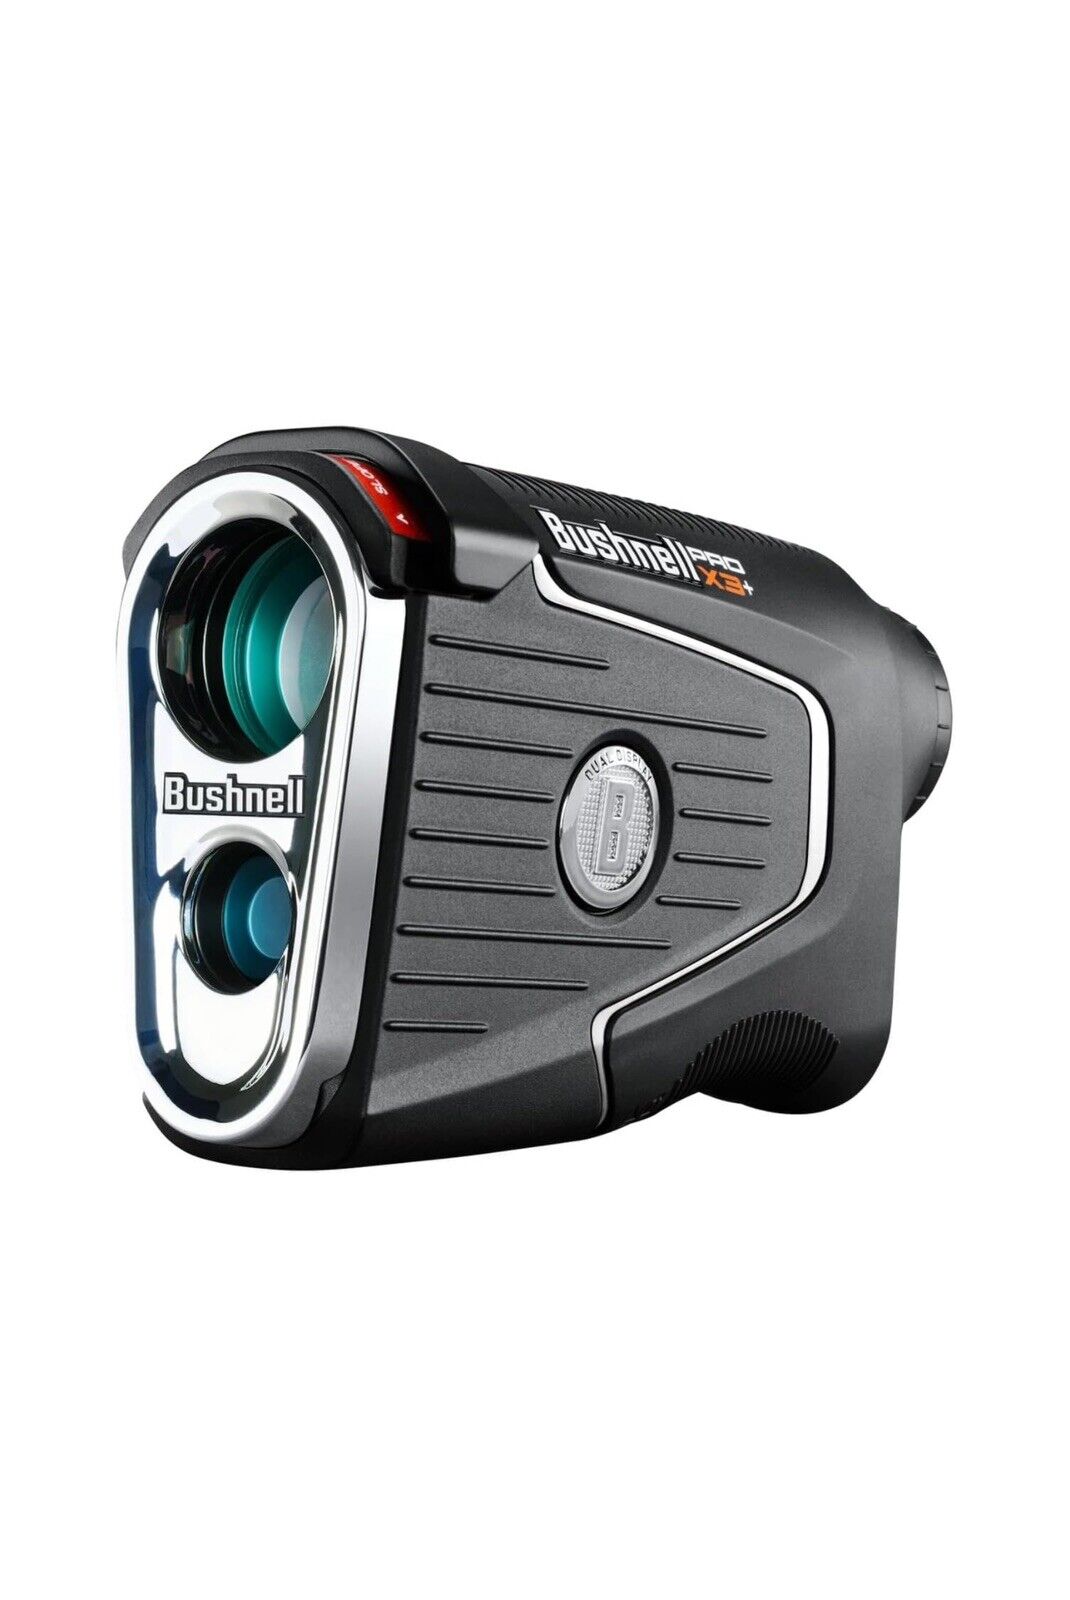 Bushnell Golf PRO X3+  Laser Rangefinder With Slope Switch